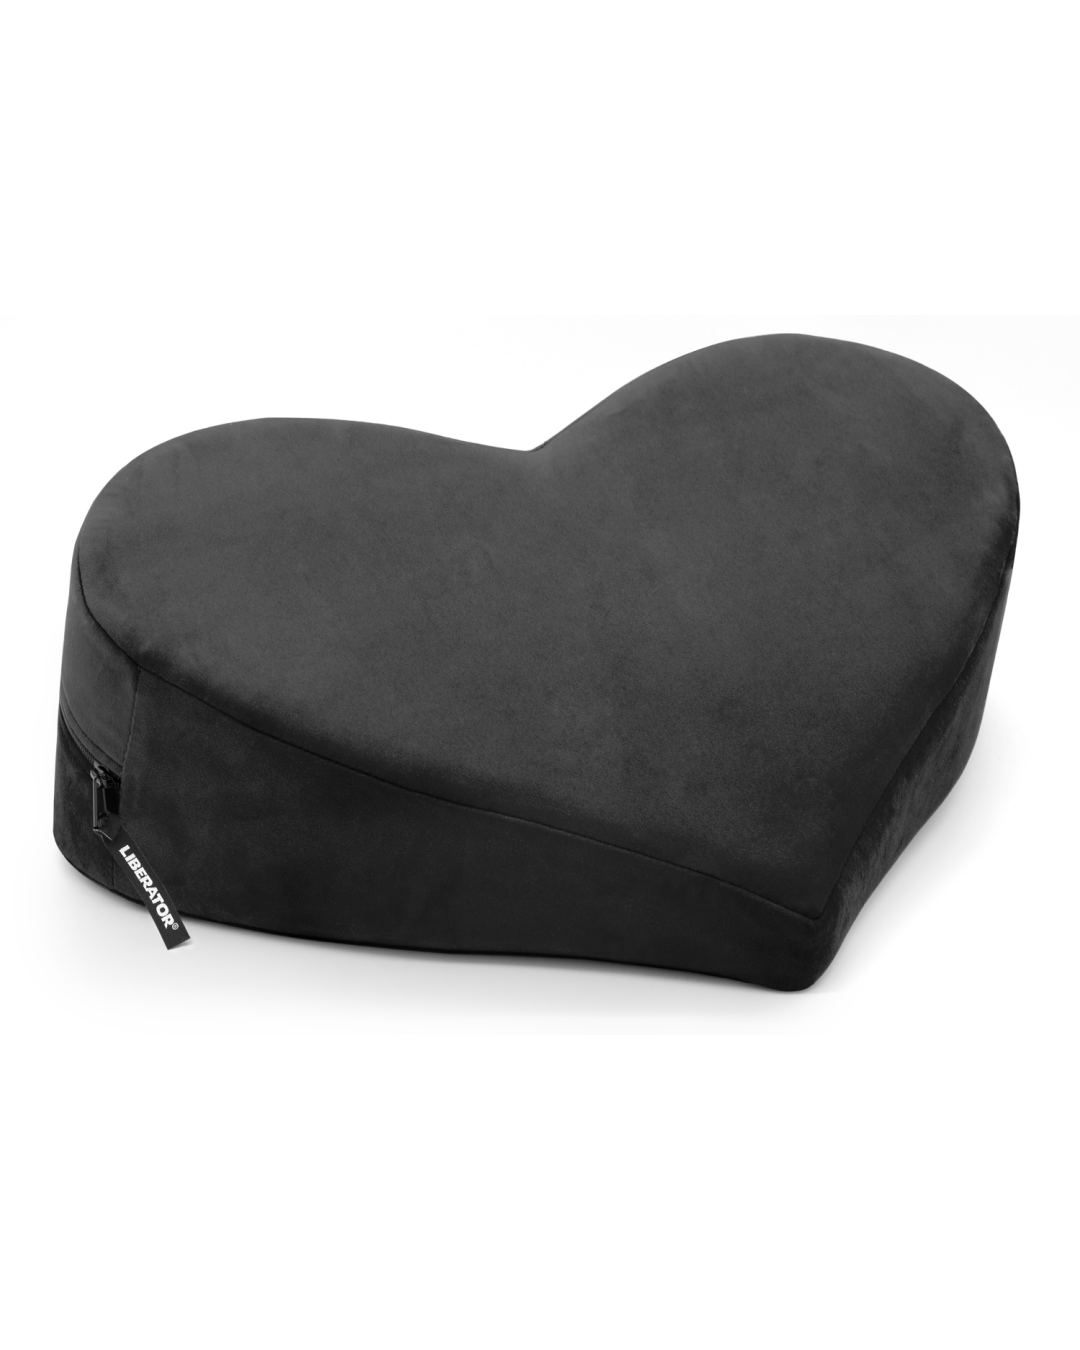 Liberator Heart Wedge Sex Positioning Cushion - Black